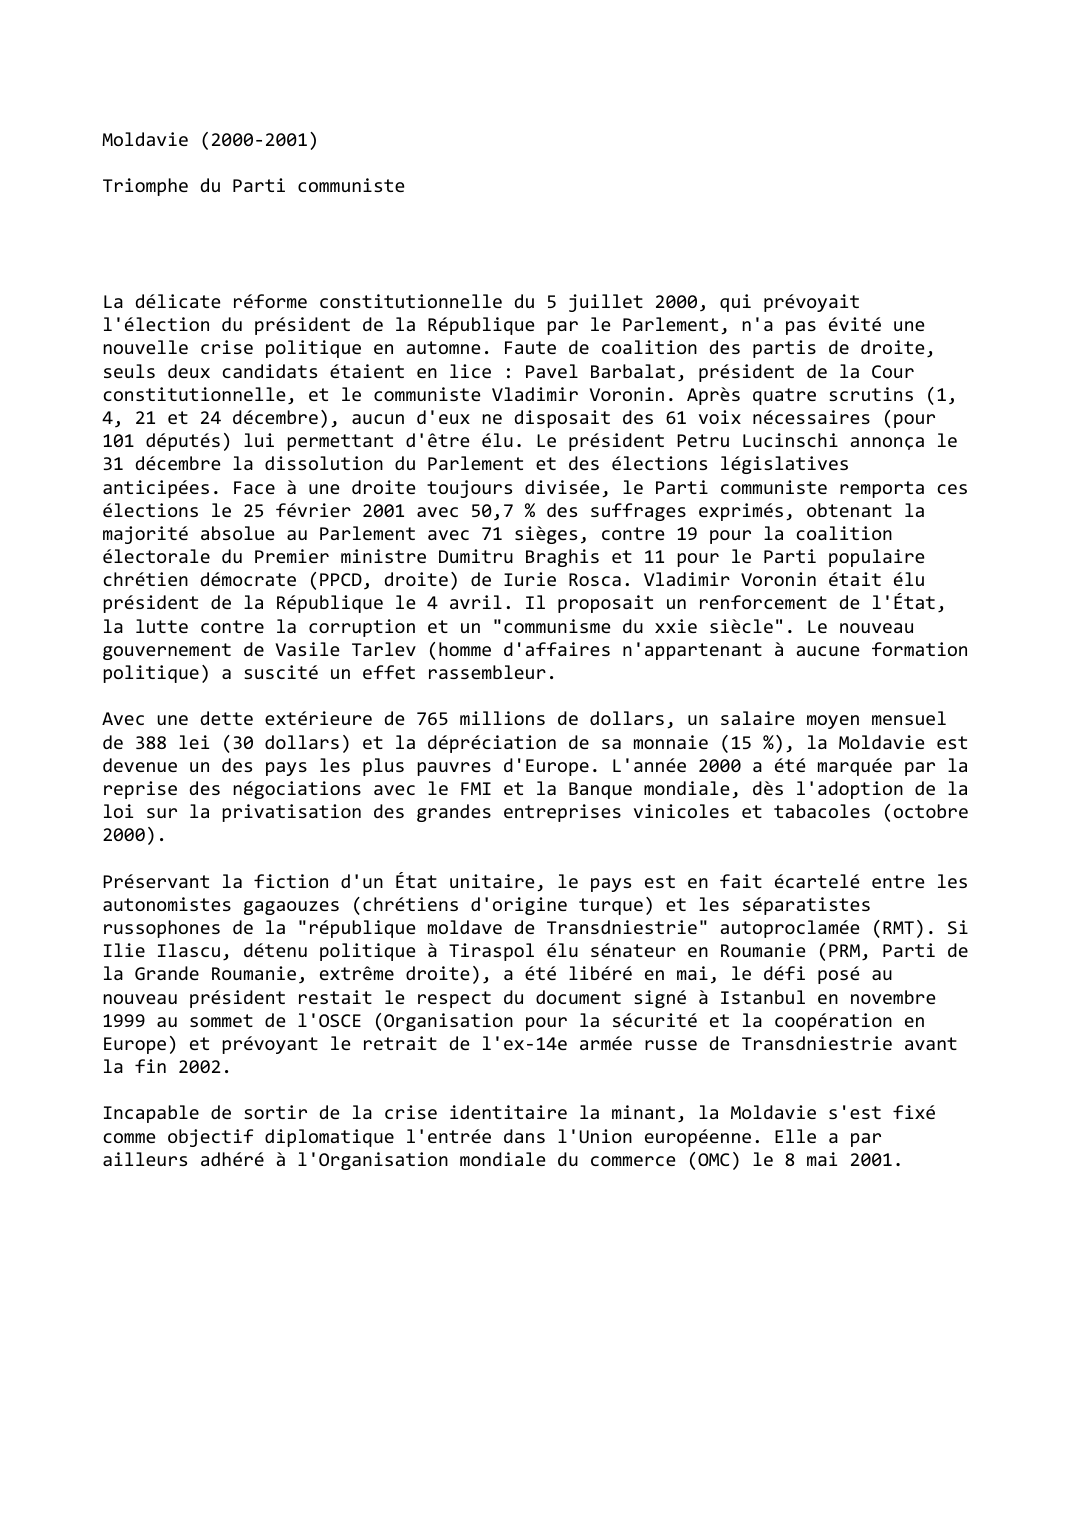 Prévisualisation du document Moldavie (2000-2001)